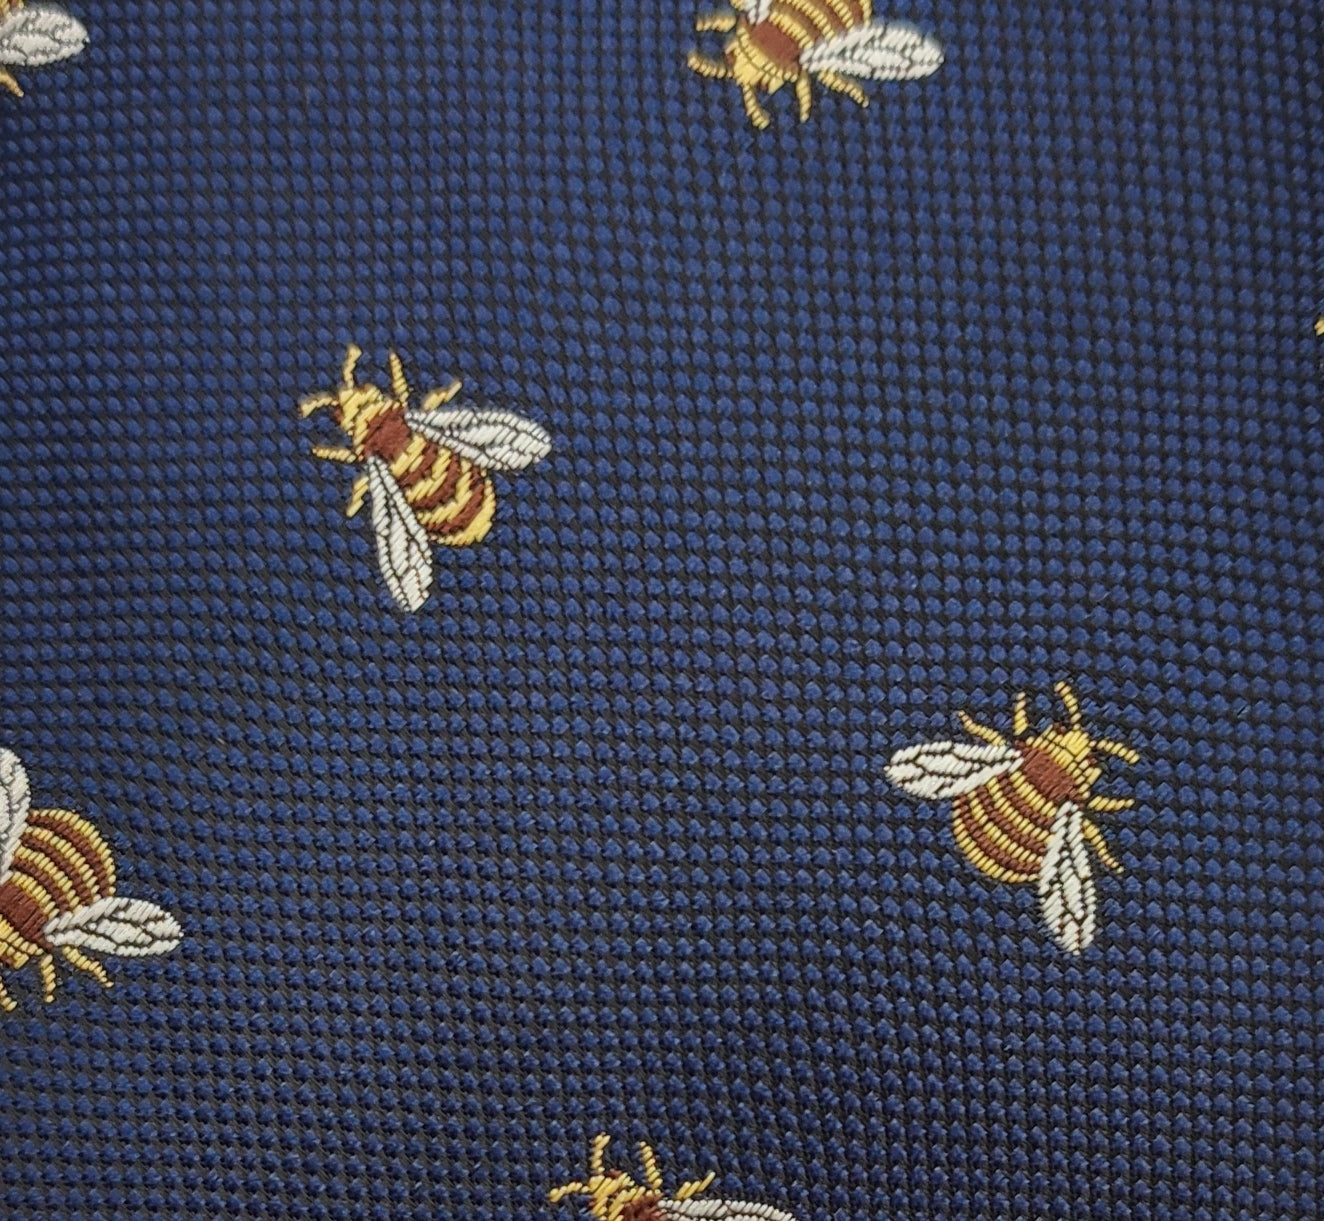 Bees Blue Microfiber Necktie